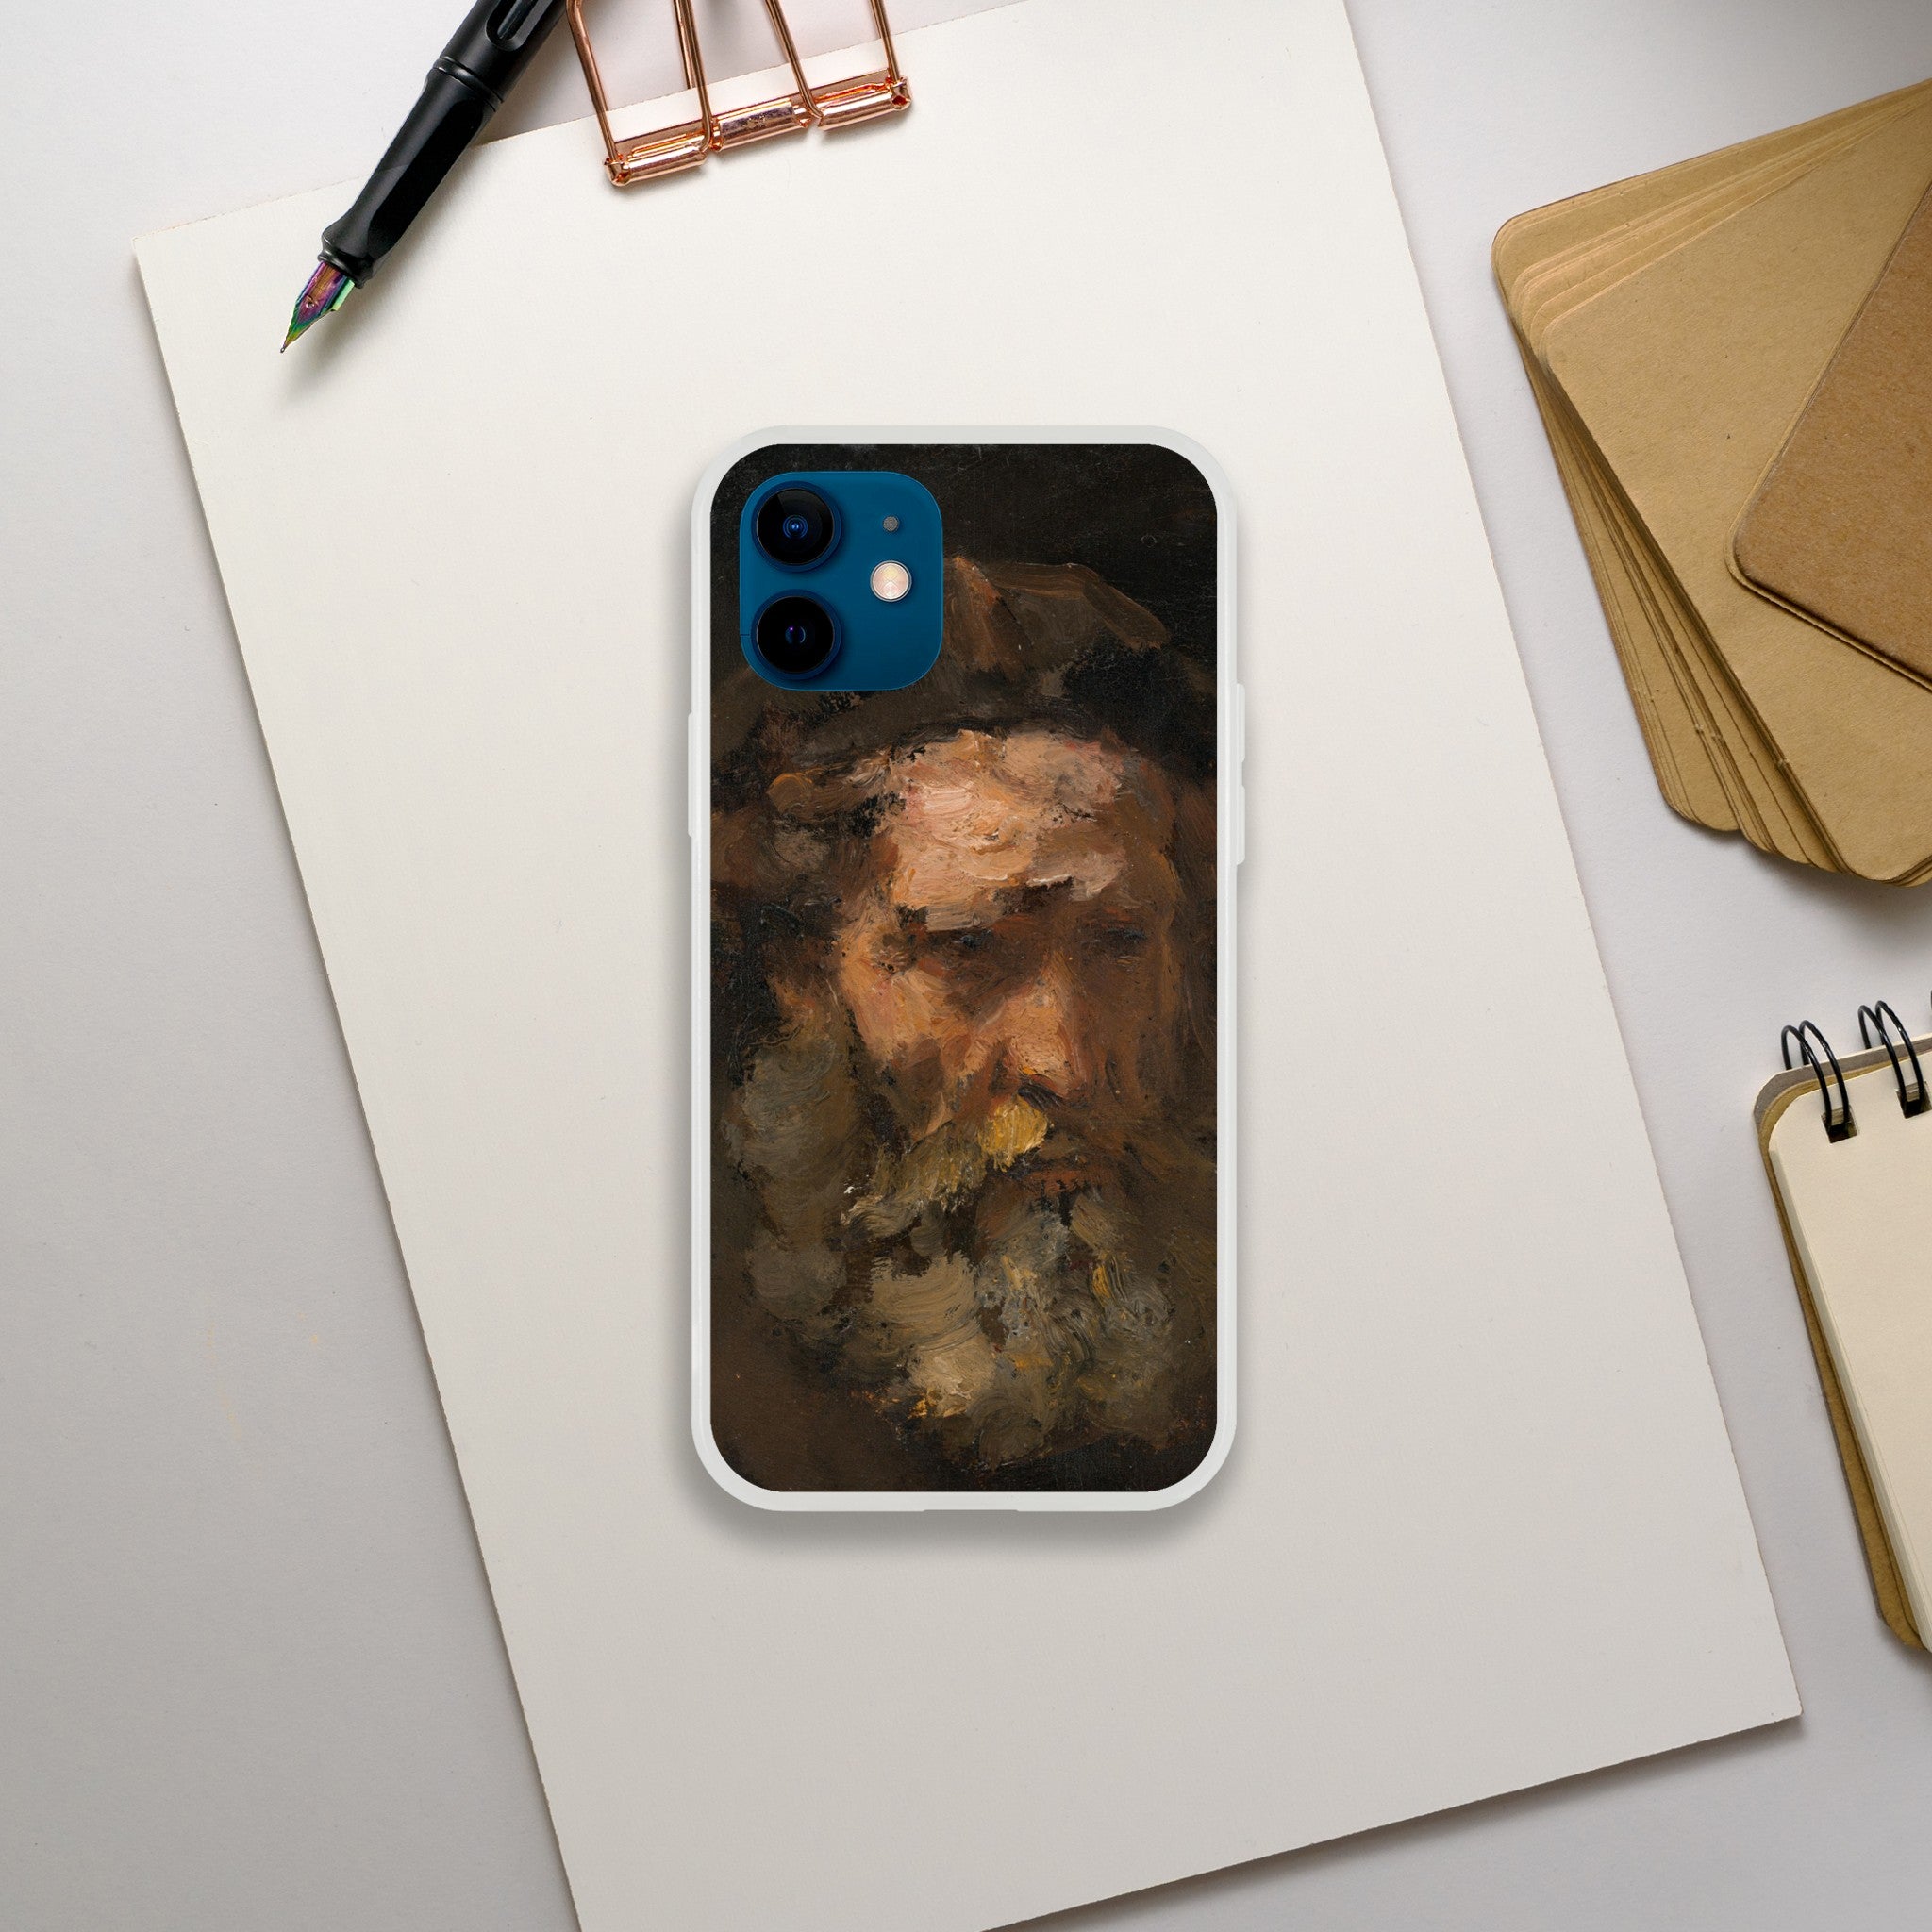 Painted Man I-phone Case